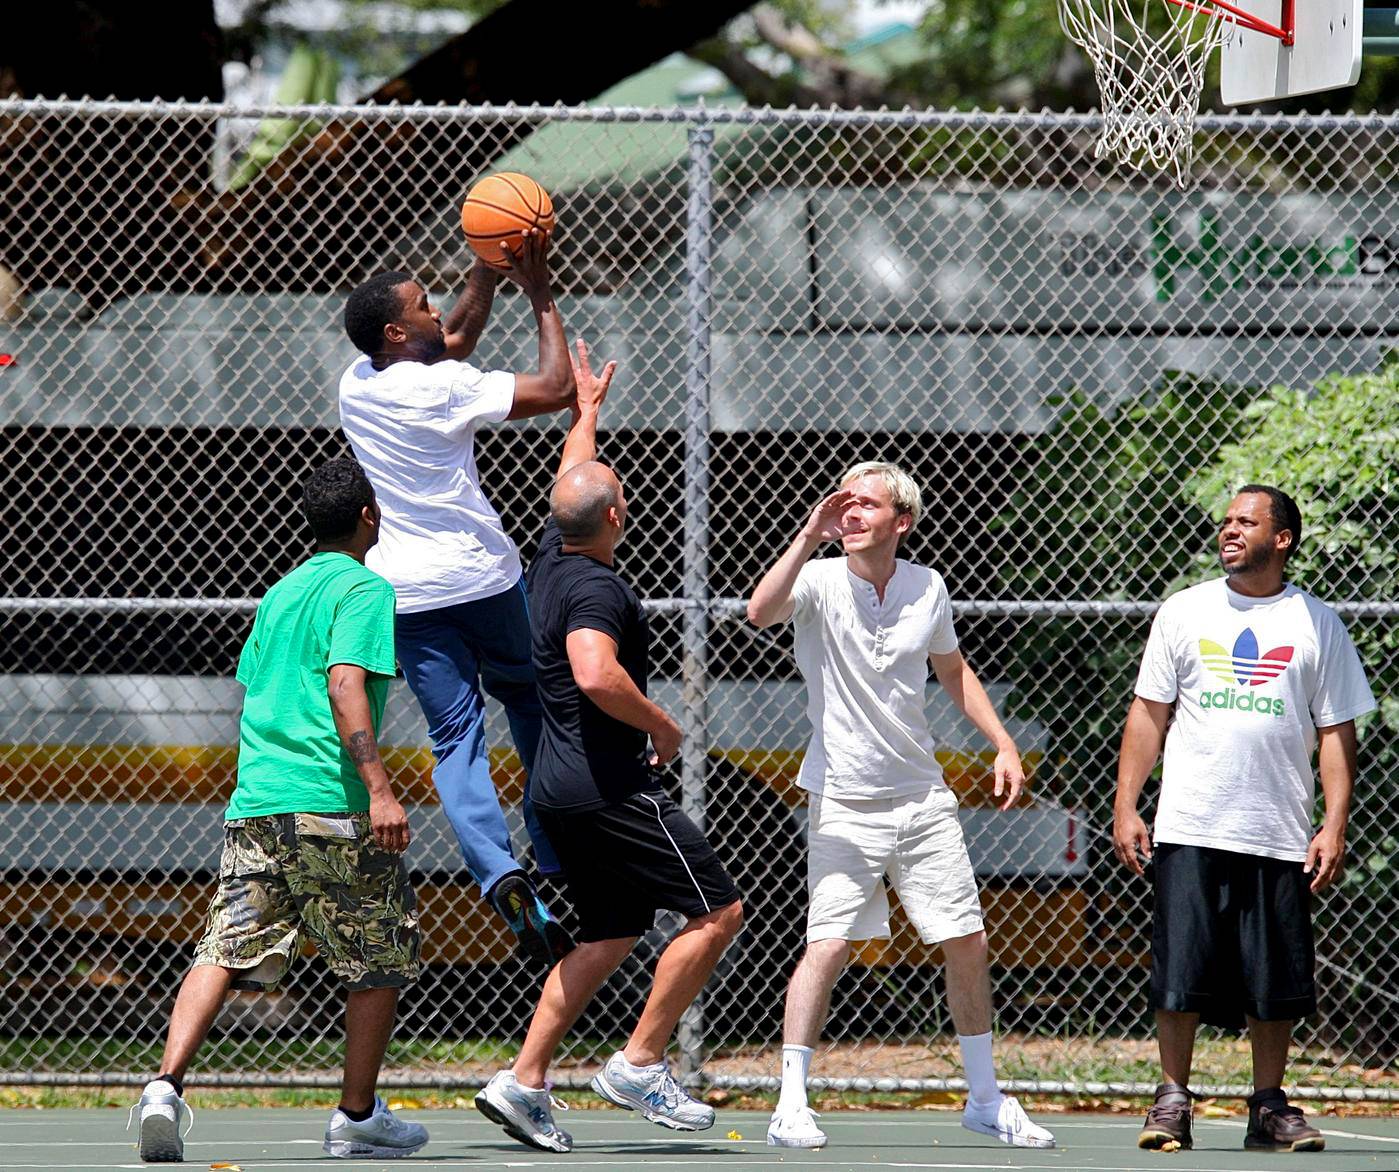 NBA All-Star Celebrity Game: Common, Ne-Yo, Trey Songz Hooping It